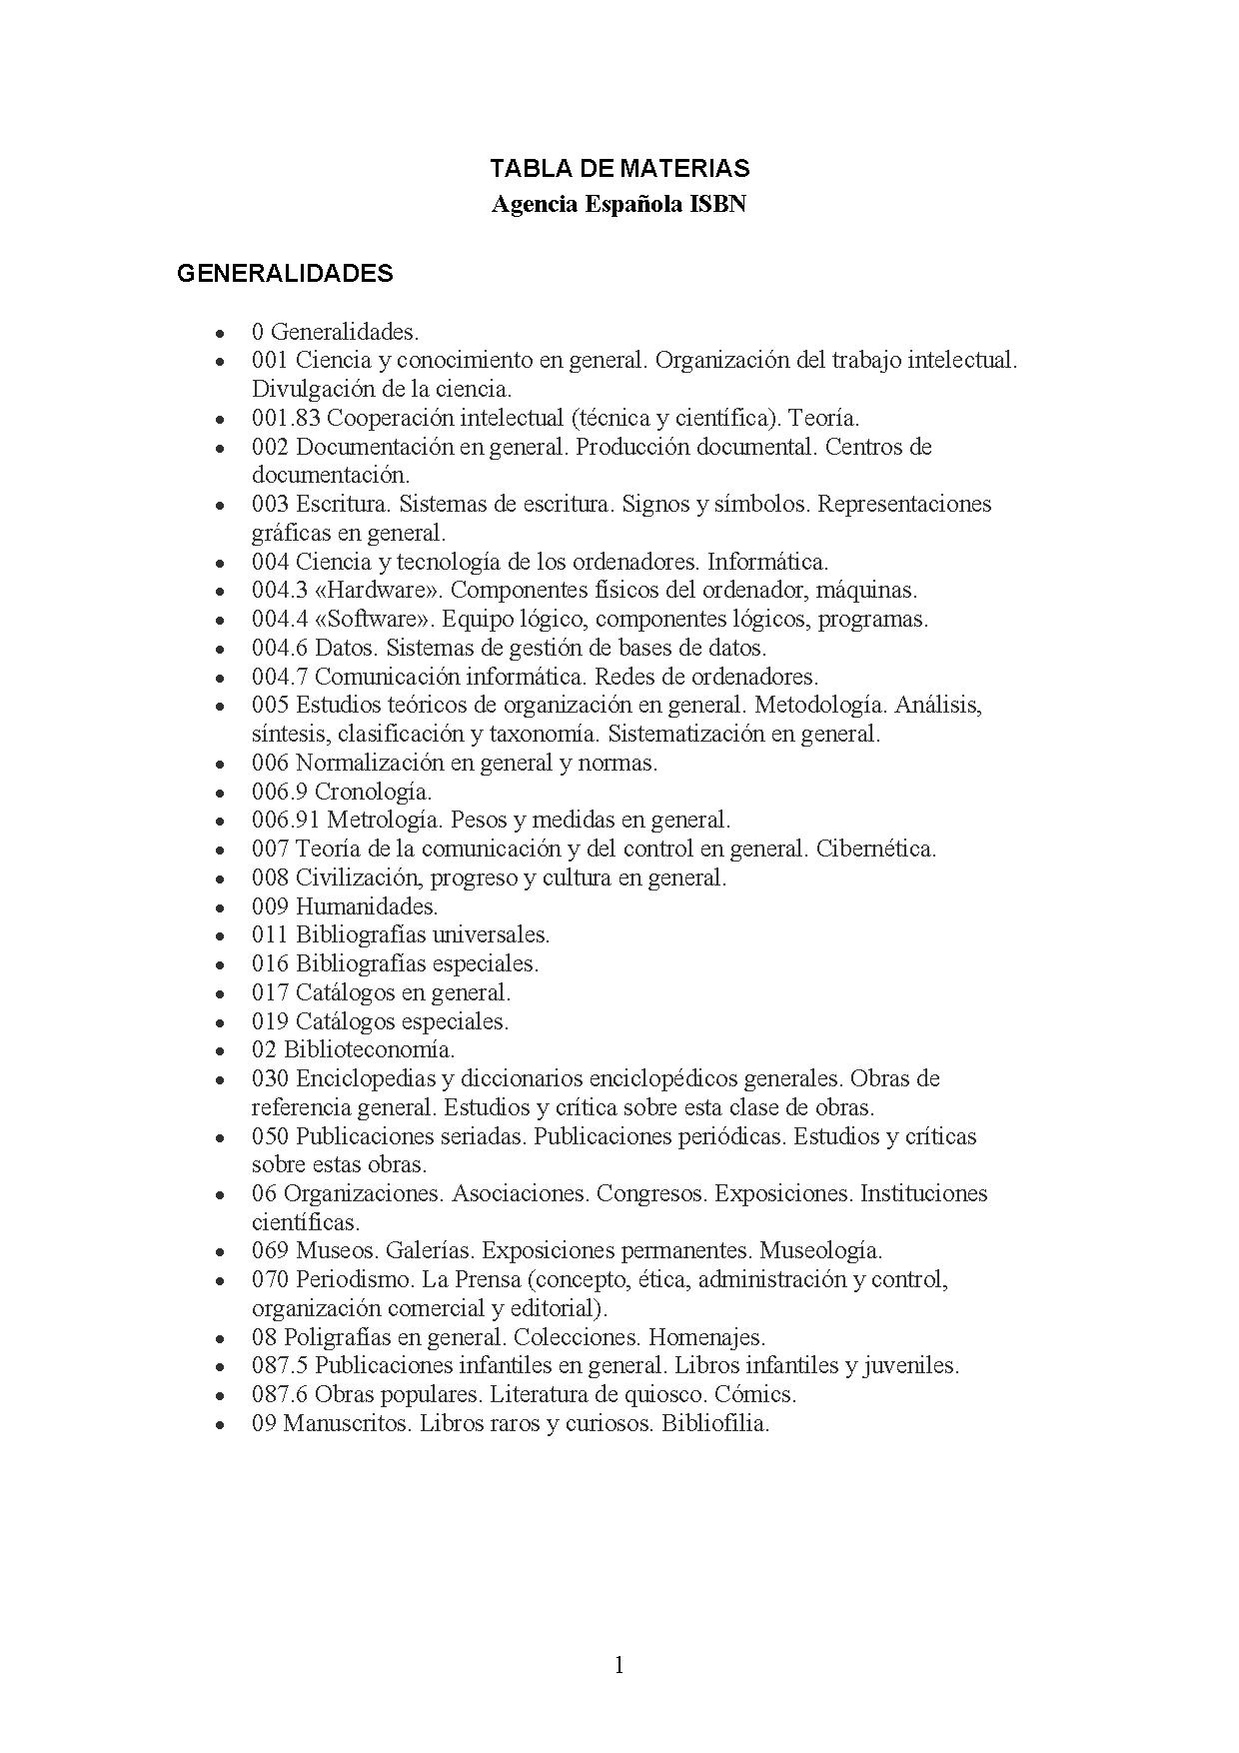 Clases de la clasificacion decimal universal.pdf